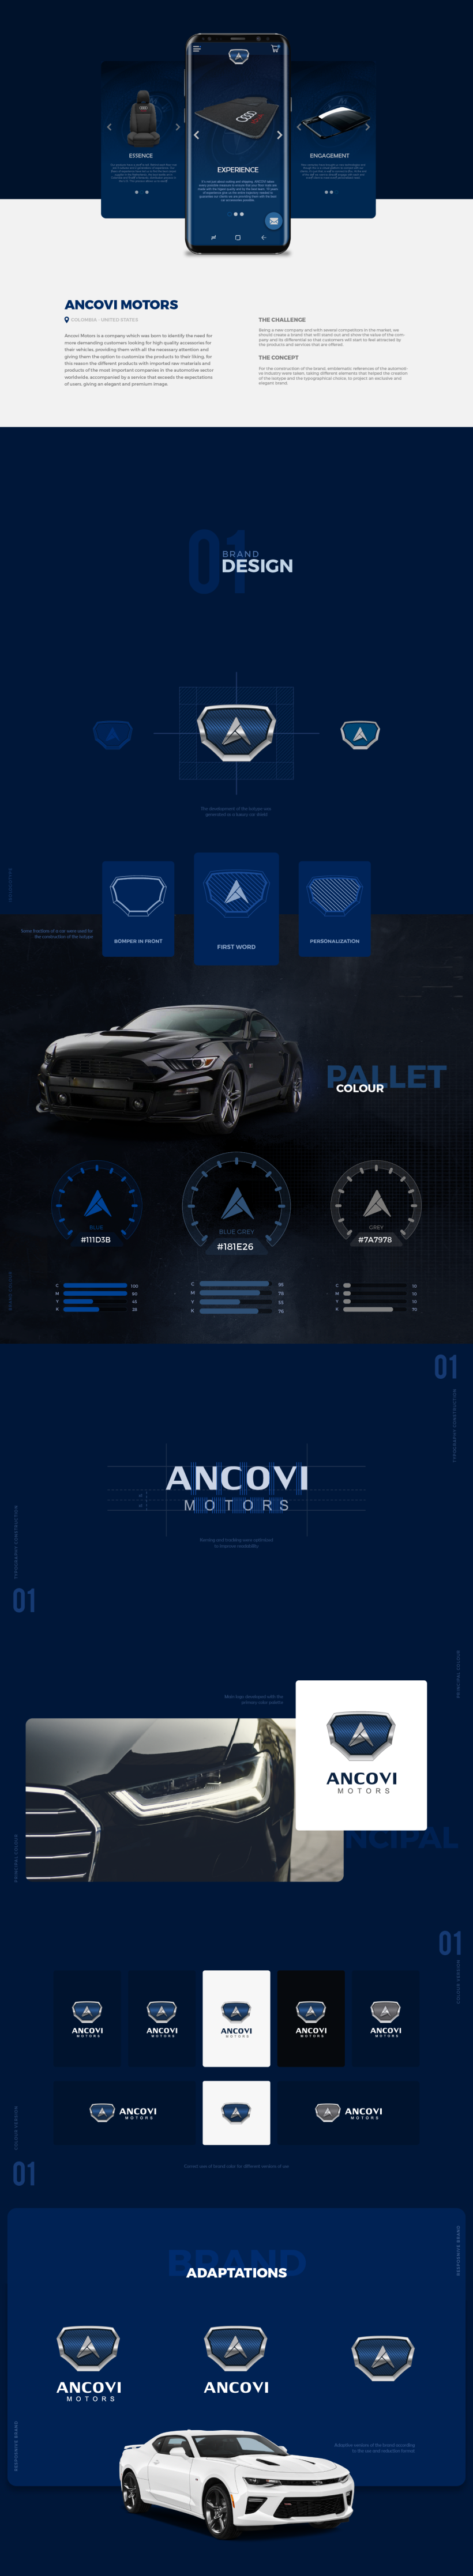 Ancovi Motors branding 1